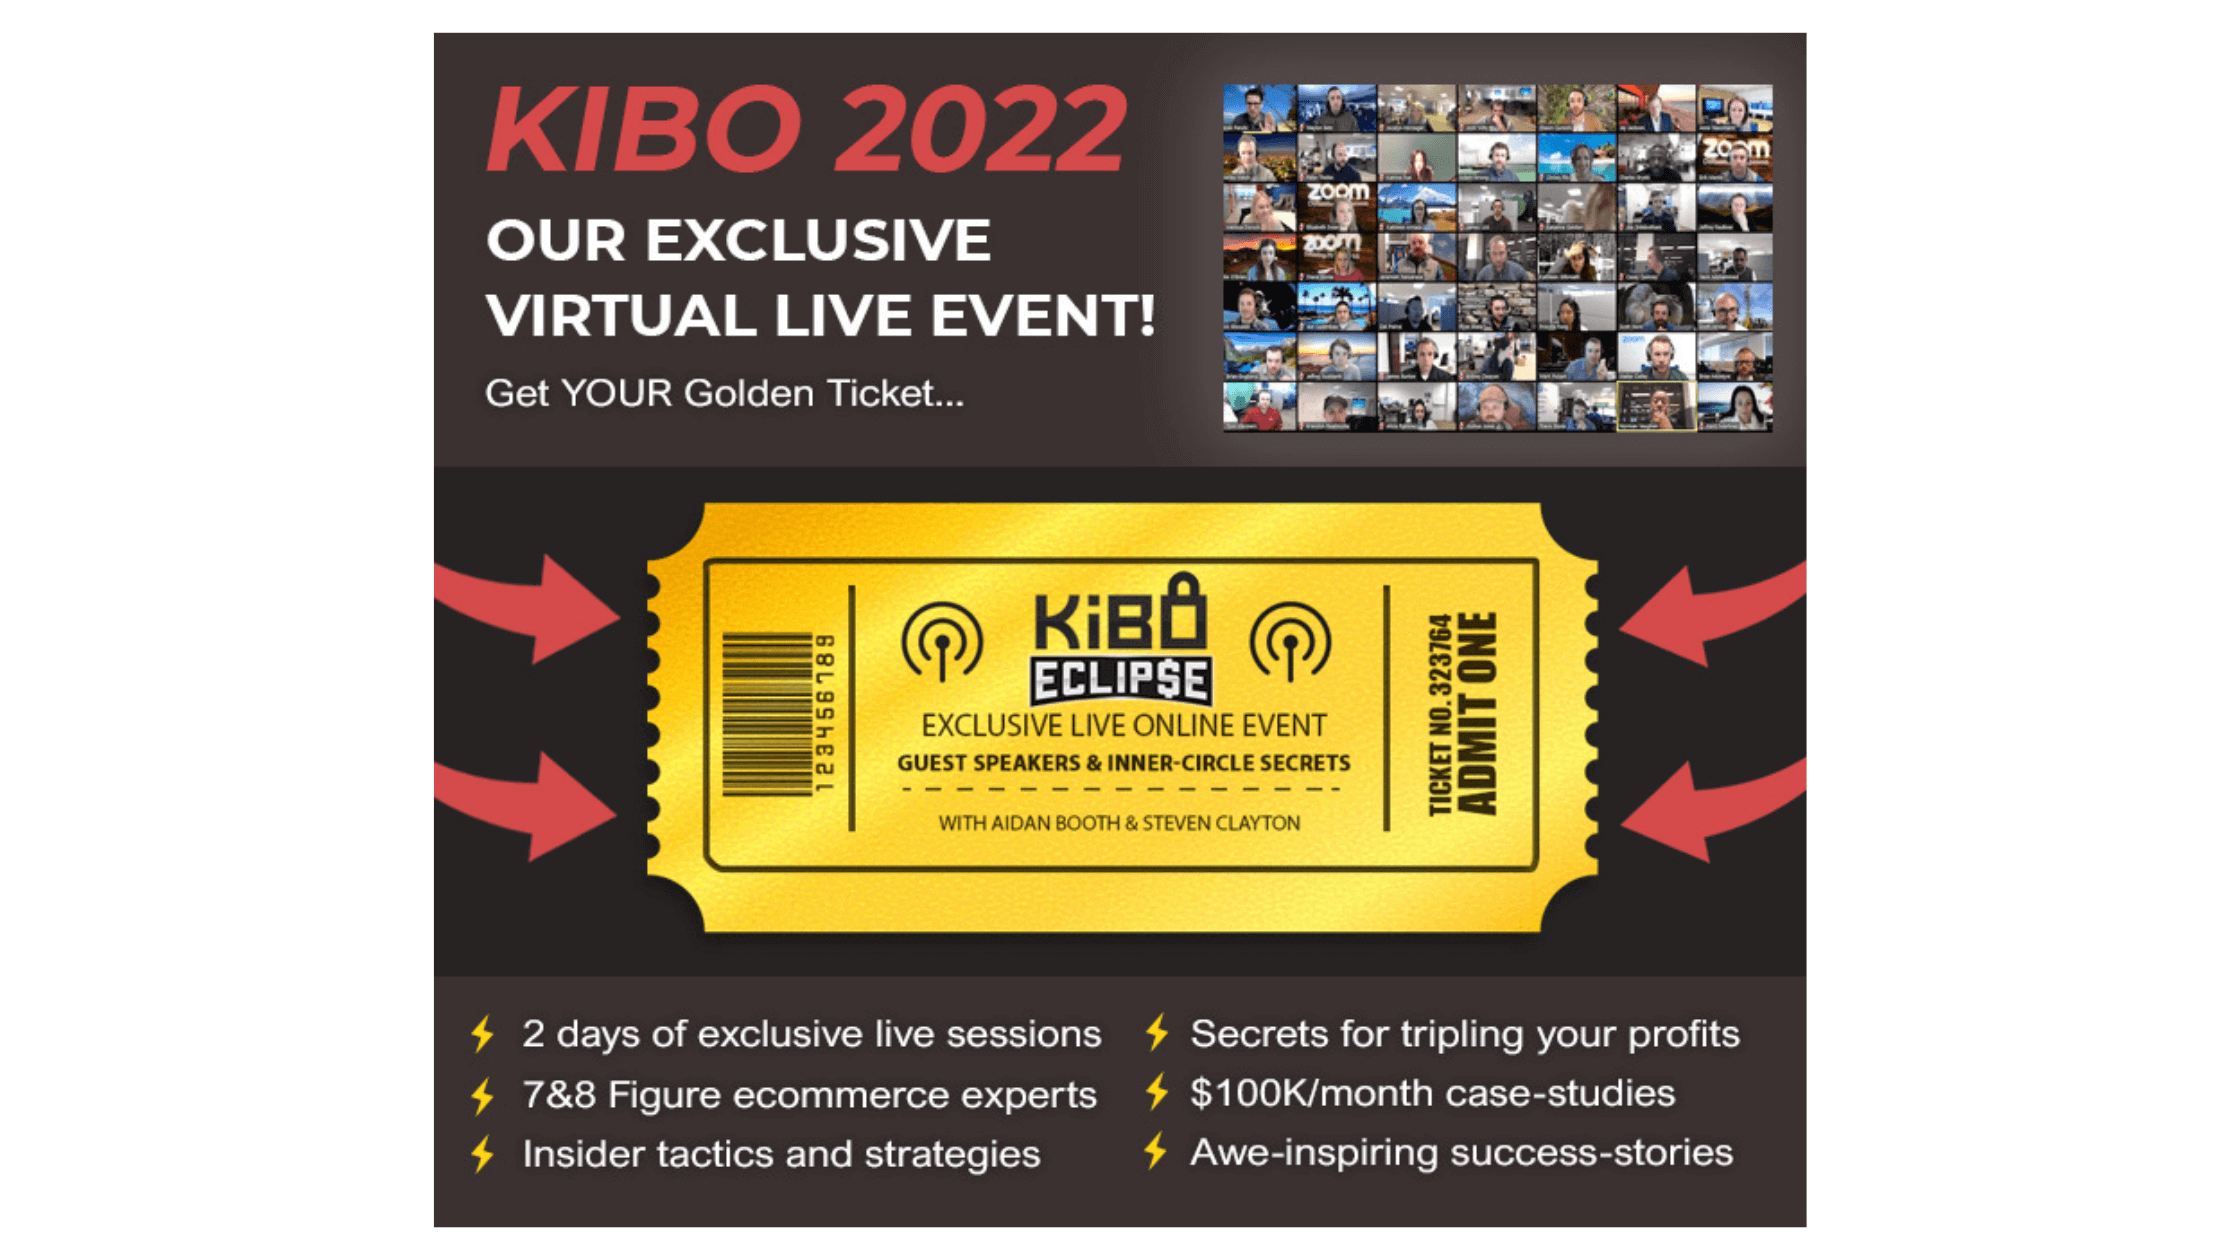 Kibo Eclipse 2022 Limited Virtual Live Event